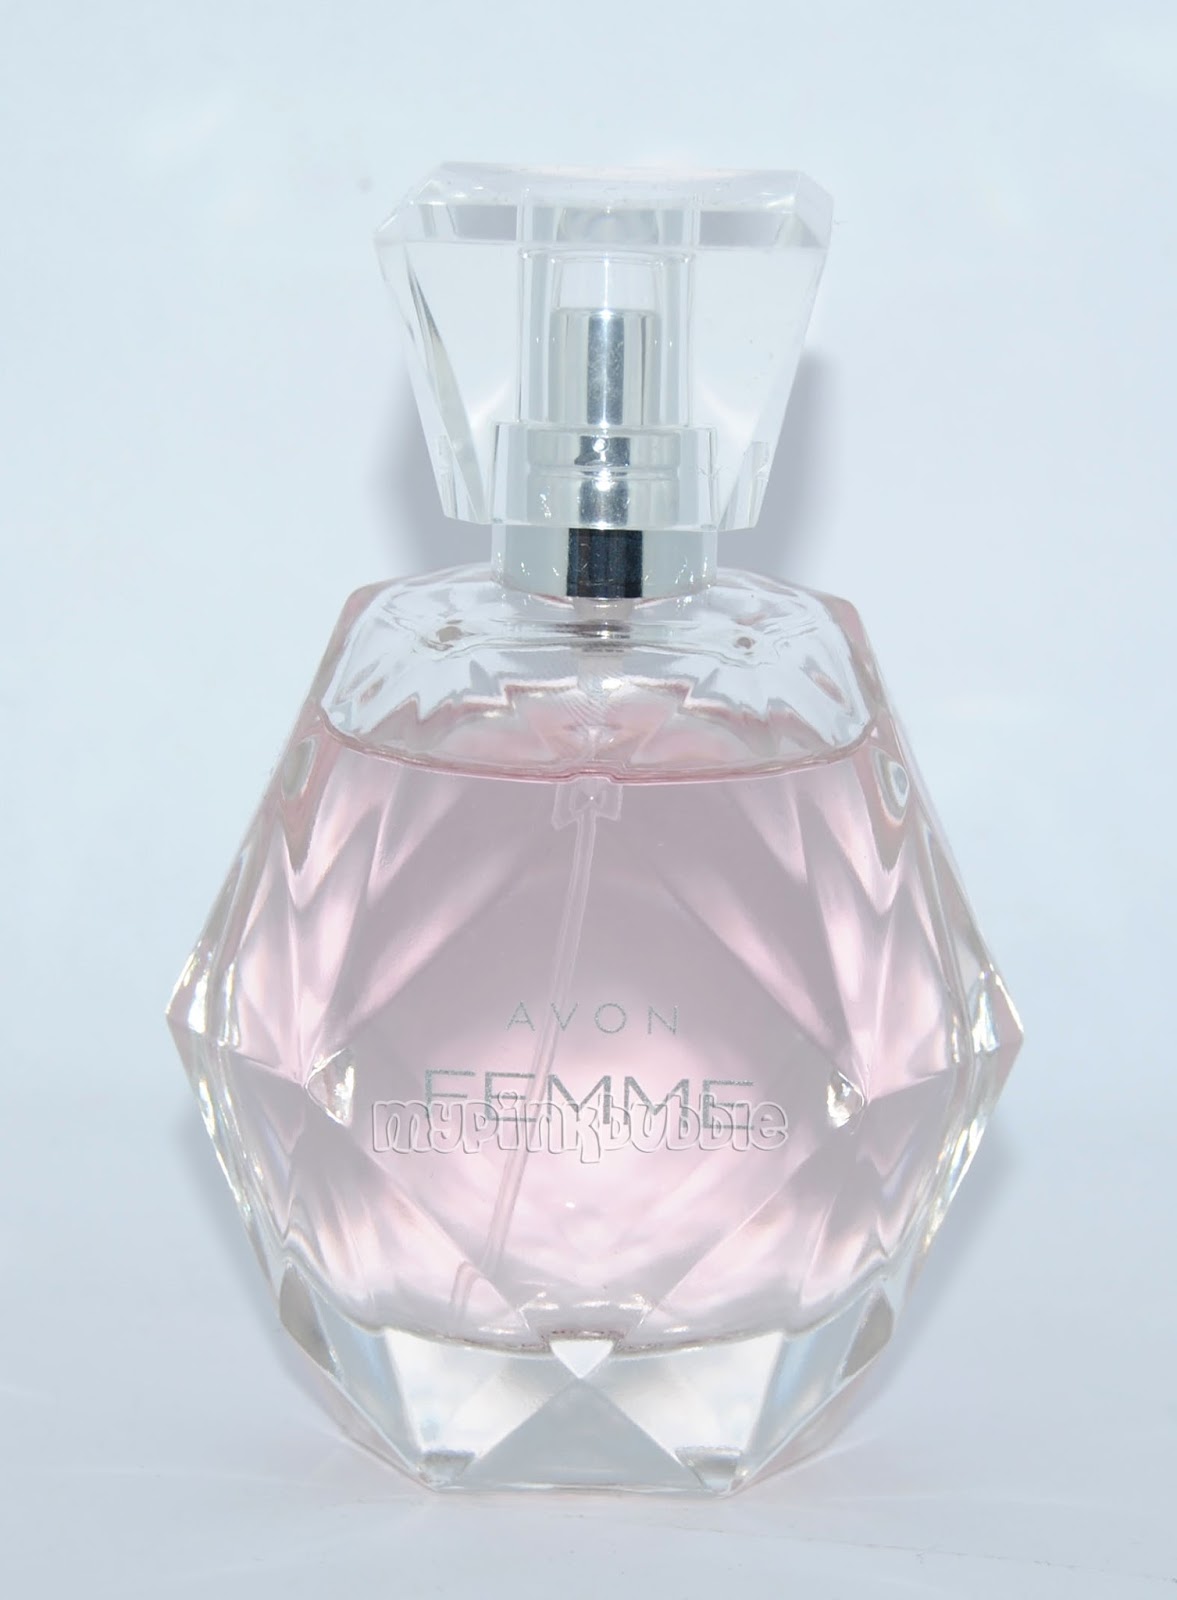 Avon perfume Femme